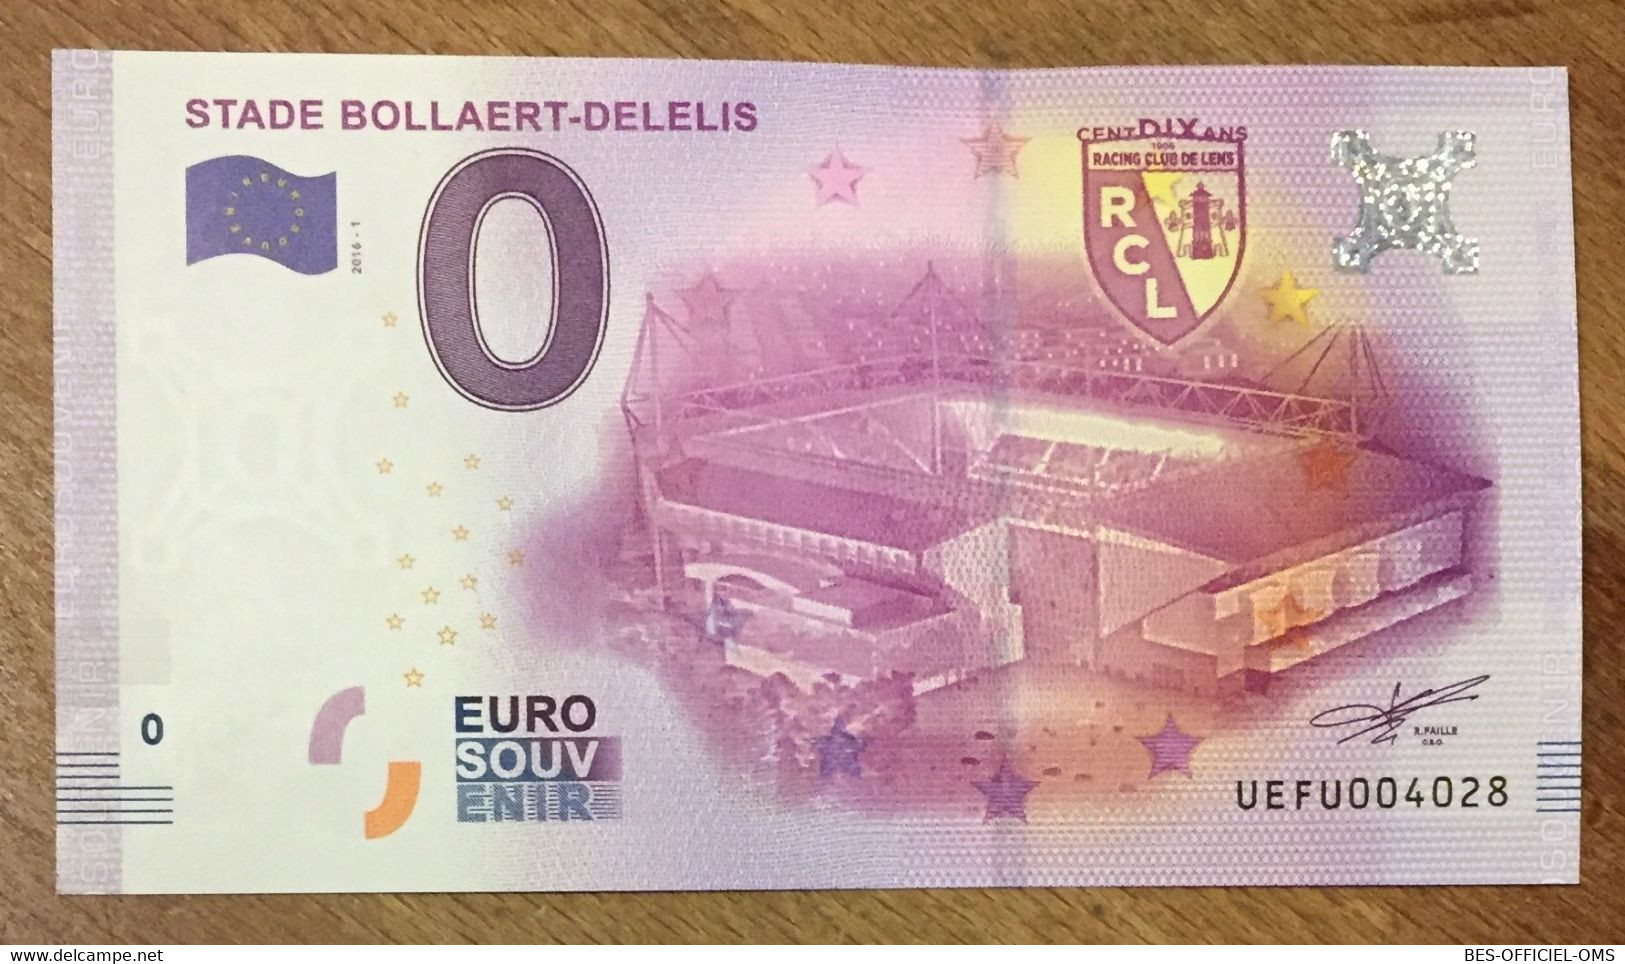 2016 BILLET 0 EURO SOUVENIR DPT 62 STADE BOLLAERT-DELELIS RCL ZERO 0 EURO SCHEIN BANKNOTE PAPER MONEY - Private Proofs / Unofficial